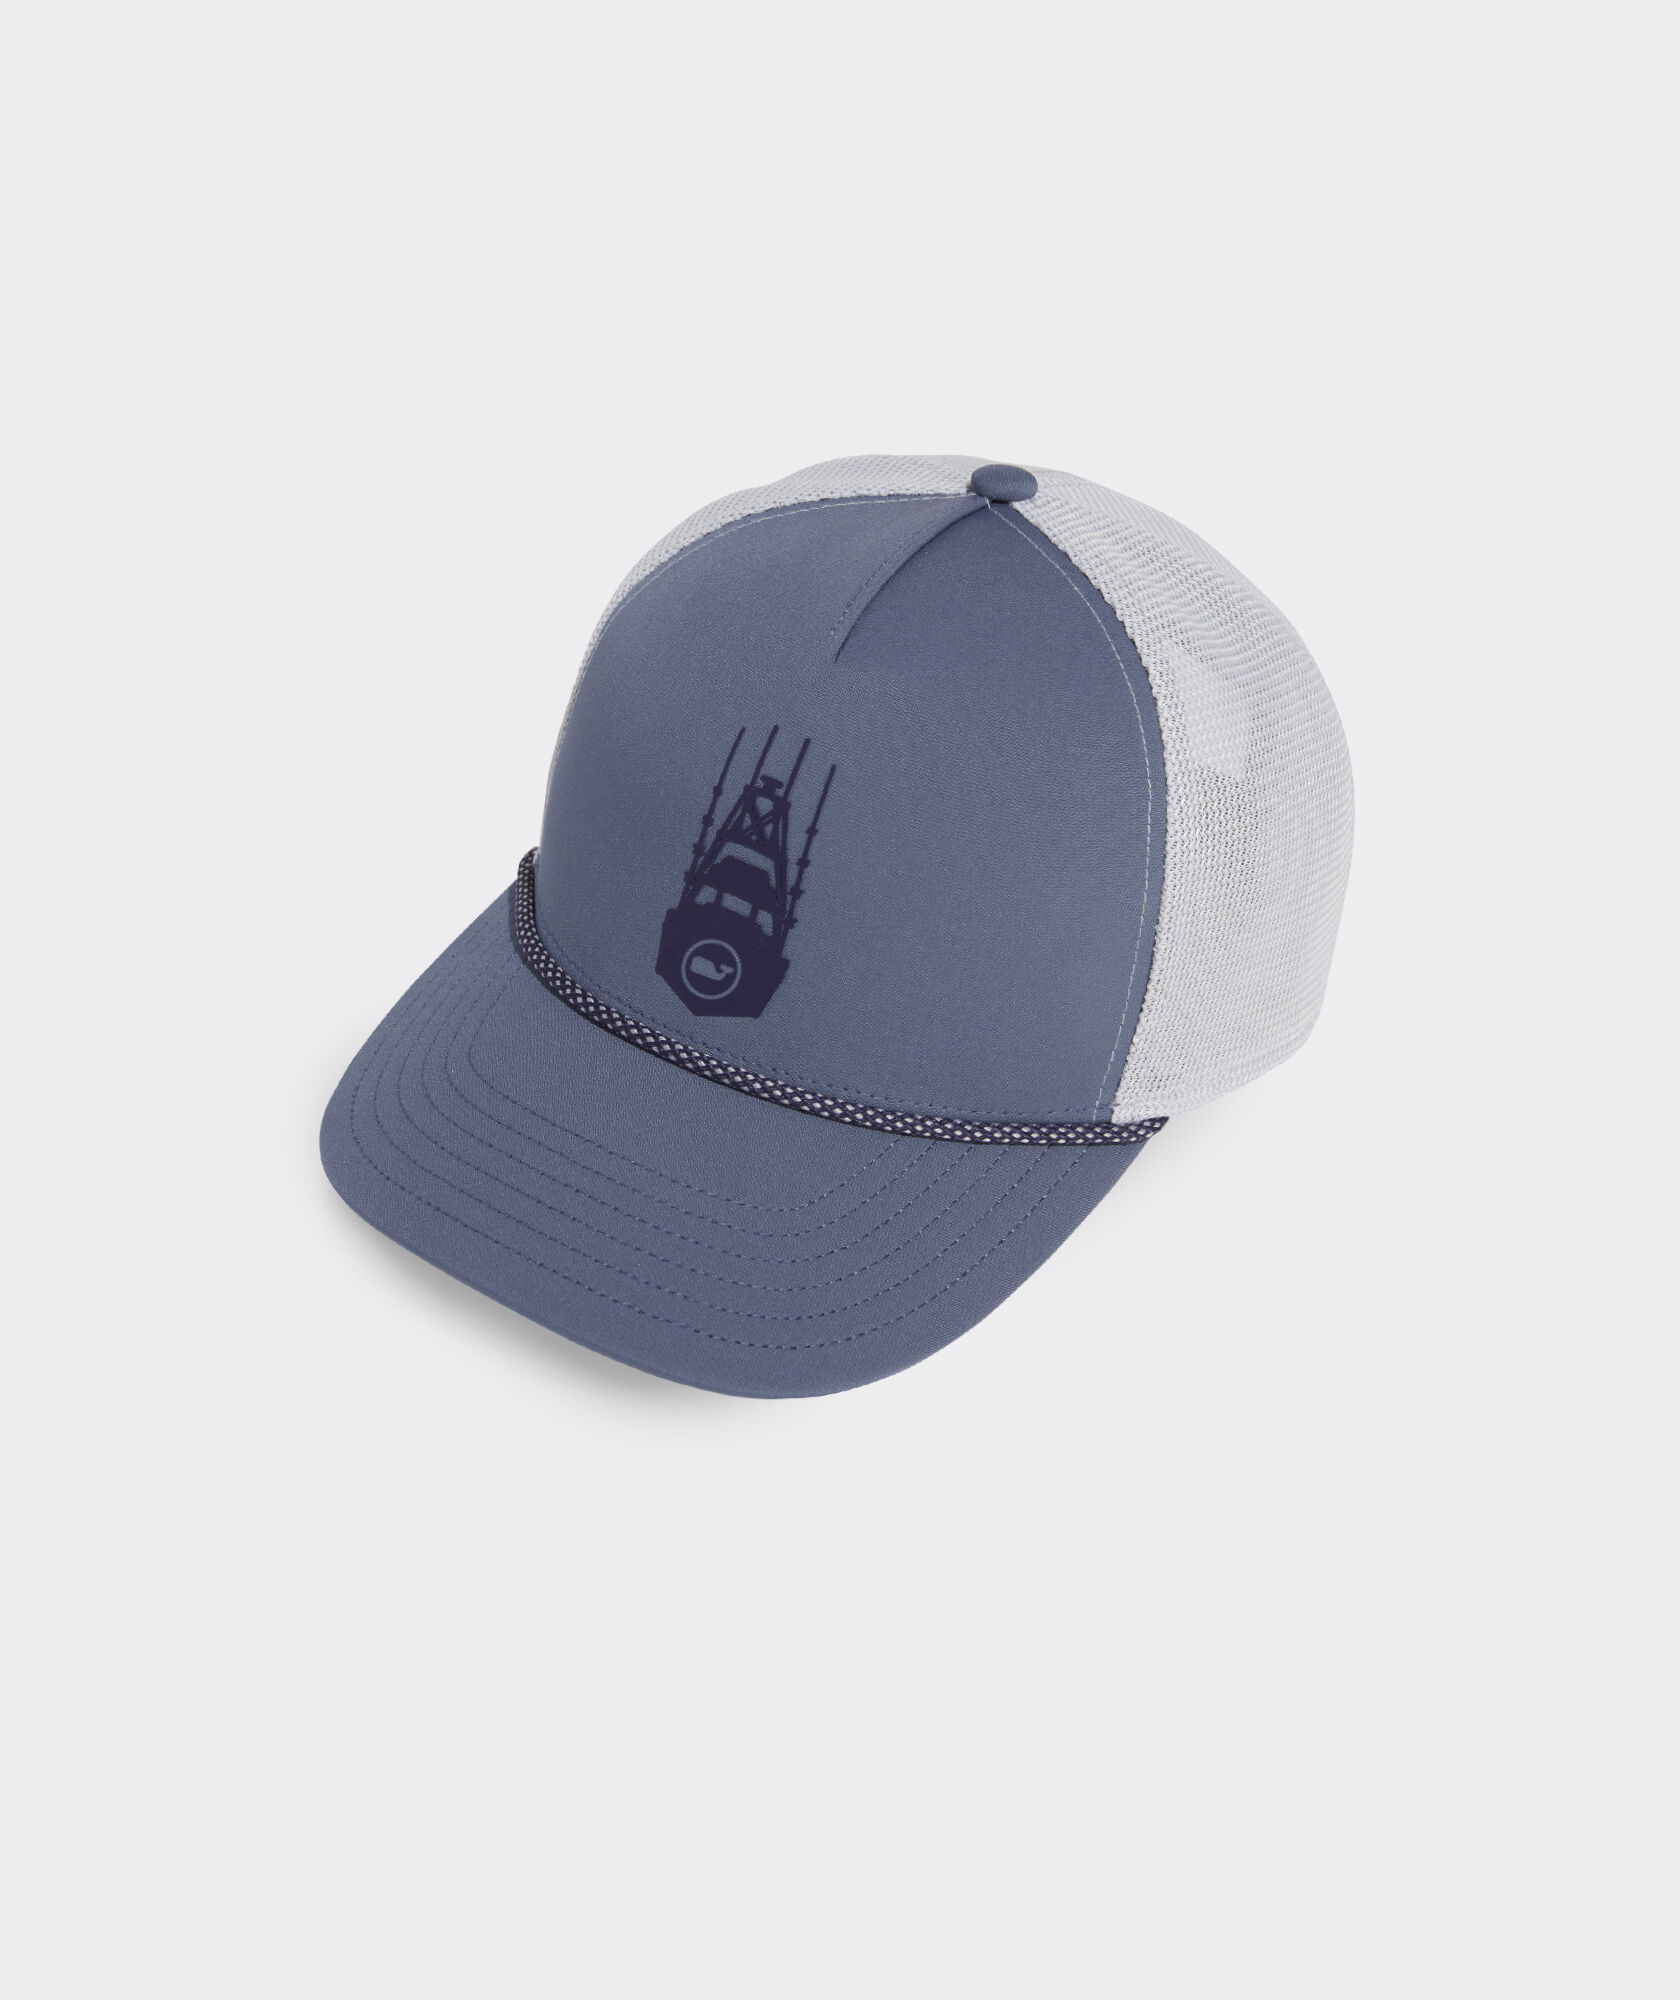 On-The-Go Sportfisher Trucker Hat